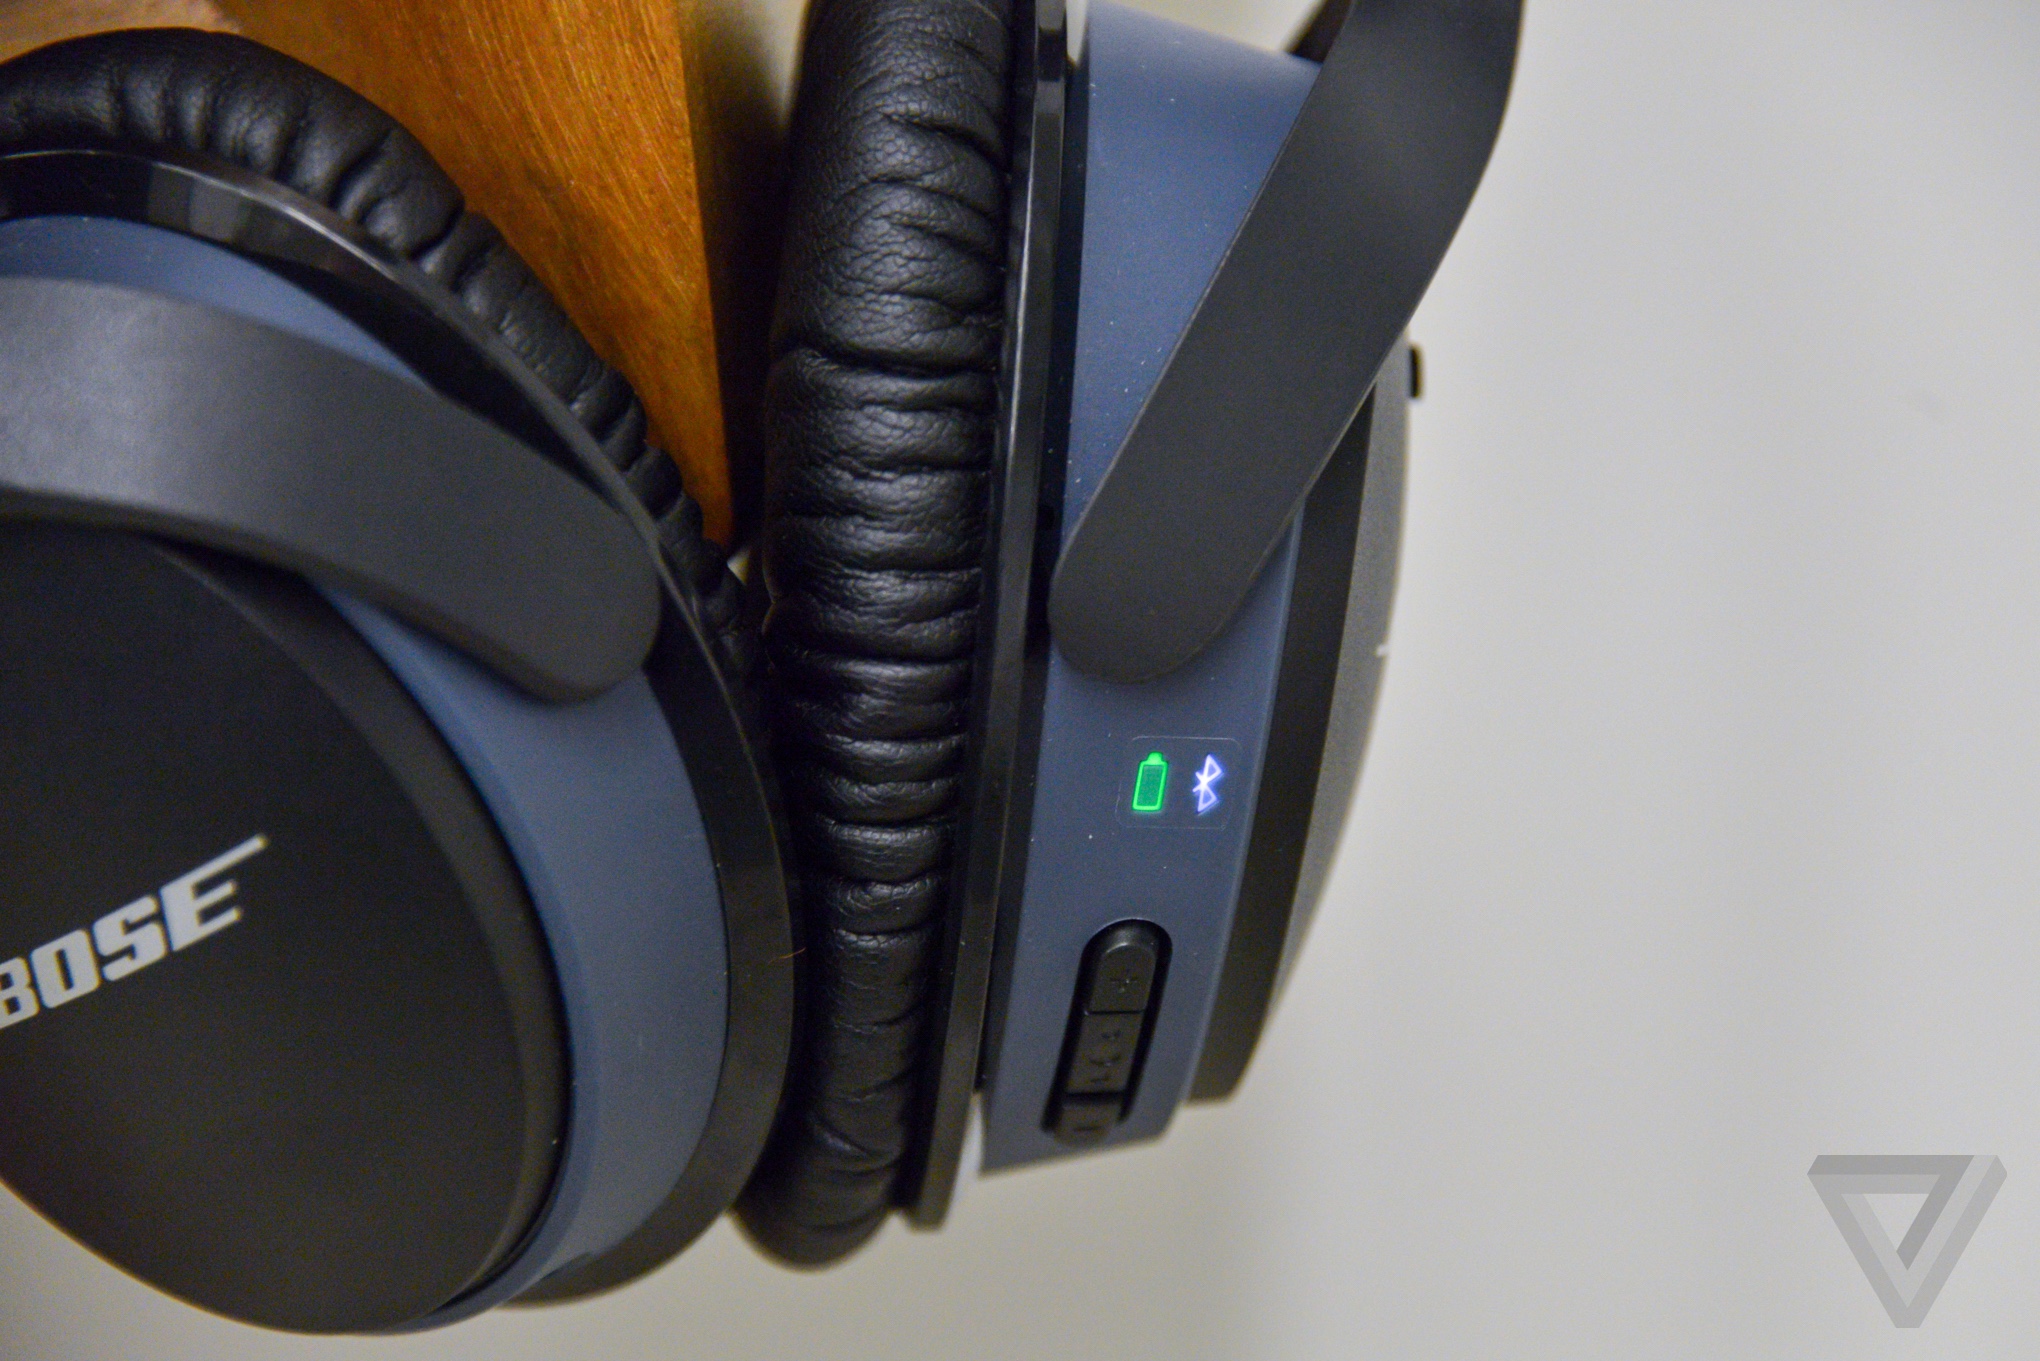 Bose SoundLink II headphones